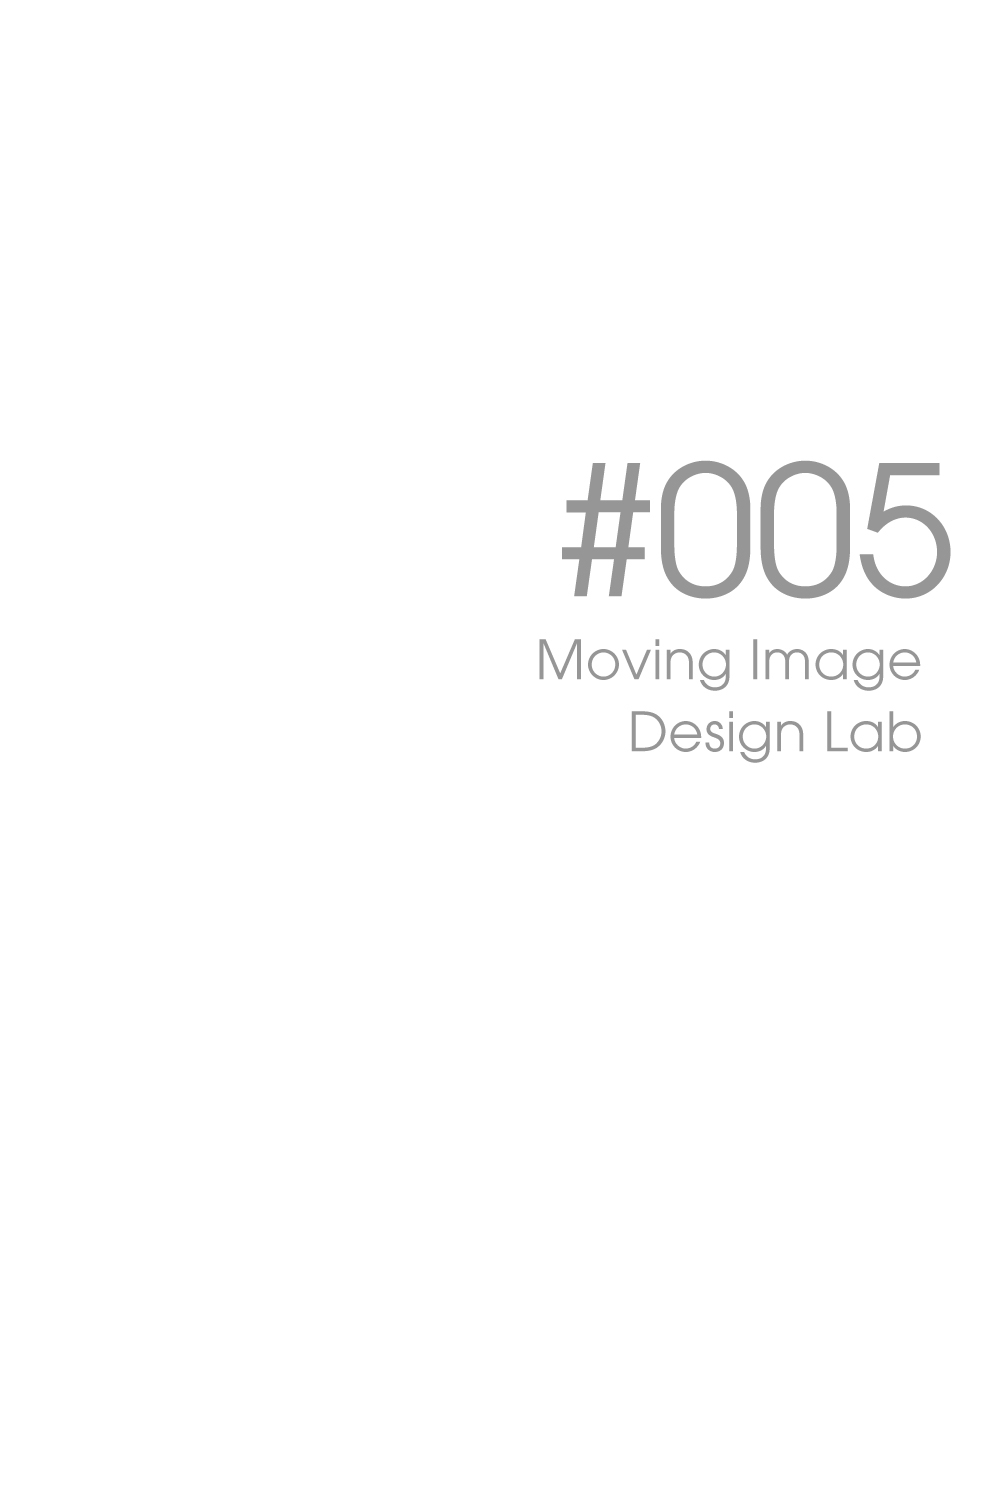 MovingImage_DesignLab